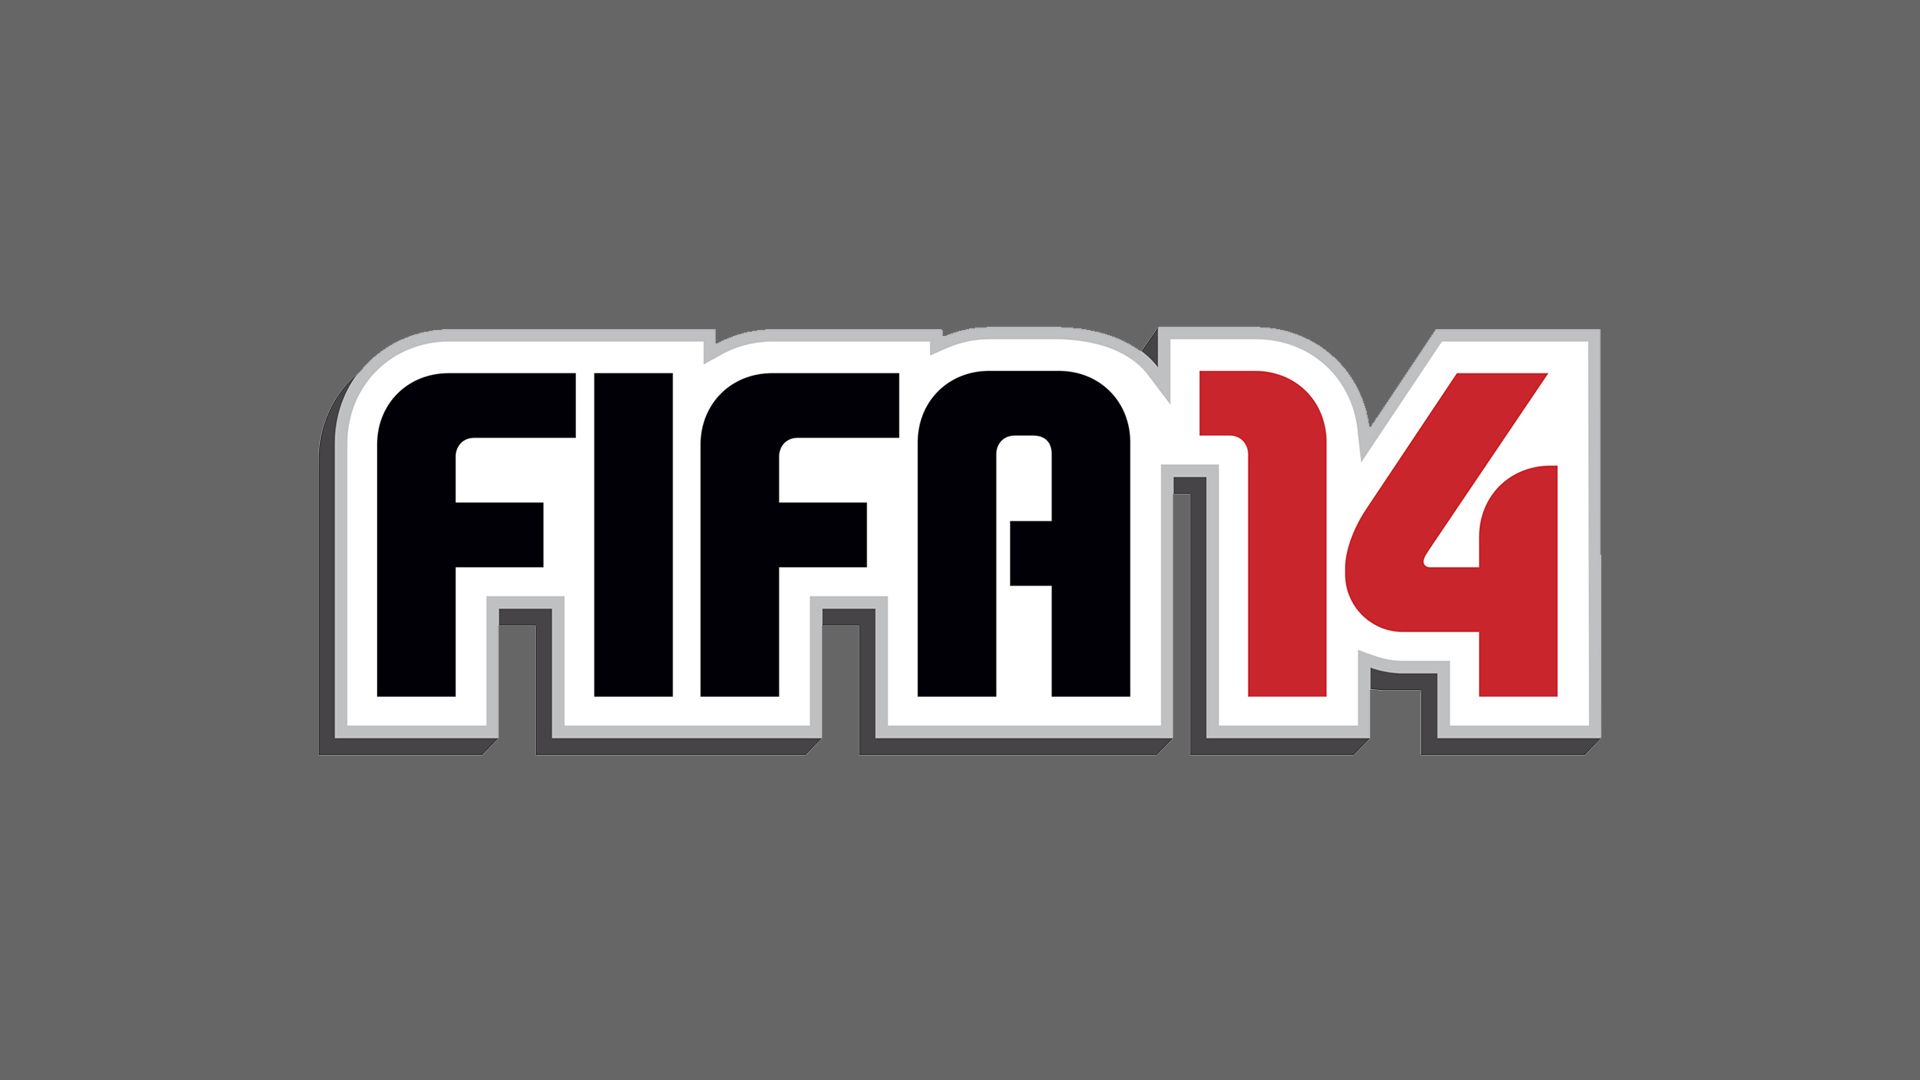 HD wallpaper, Fifa, Wallpaper, Logo, 14